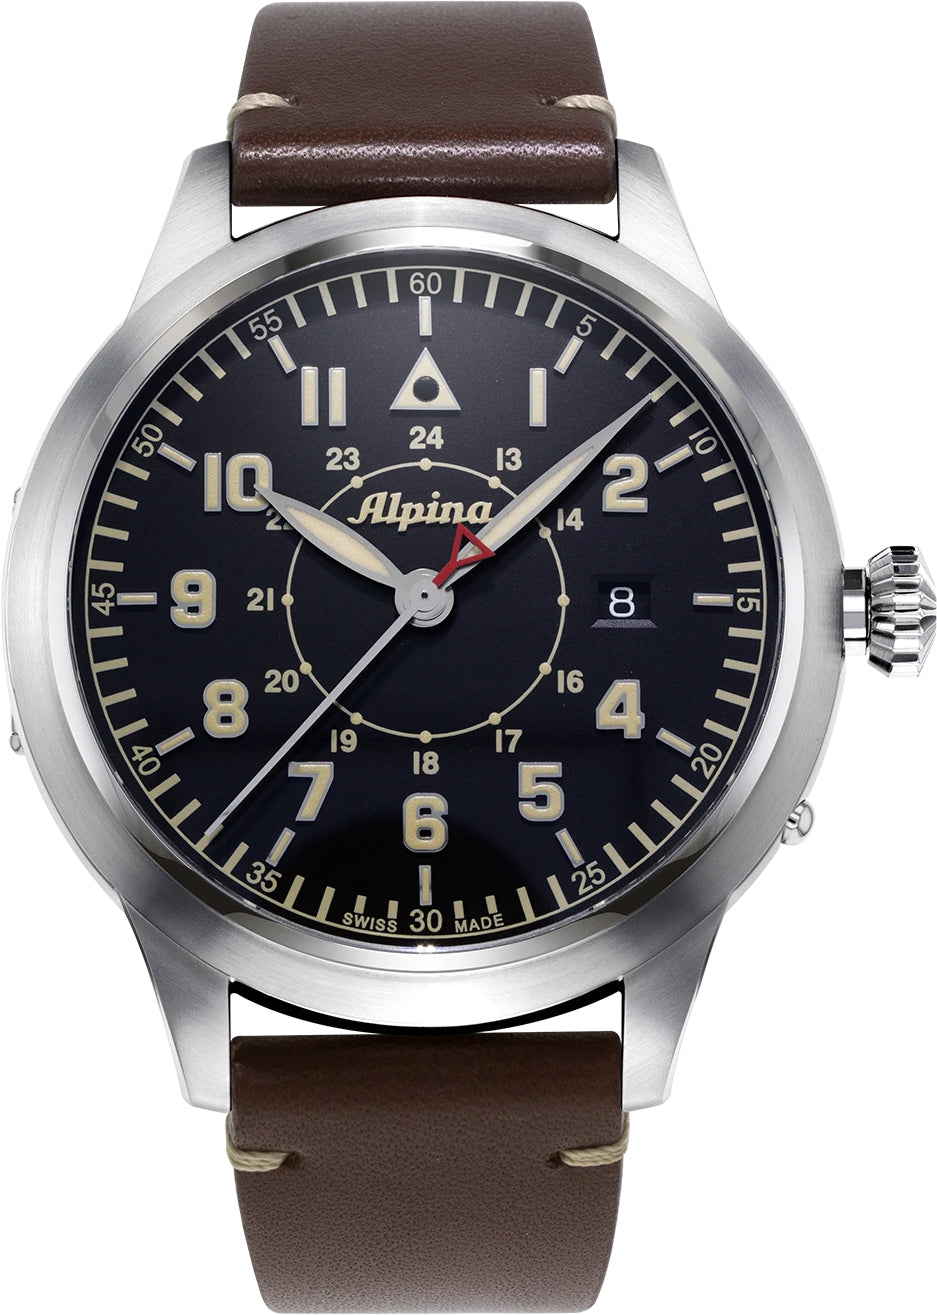 Photos - Wrist Watch Alpina Watch Startimer Pilot Chronograph Big Date - Black ALP-343 